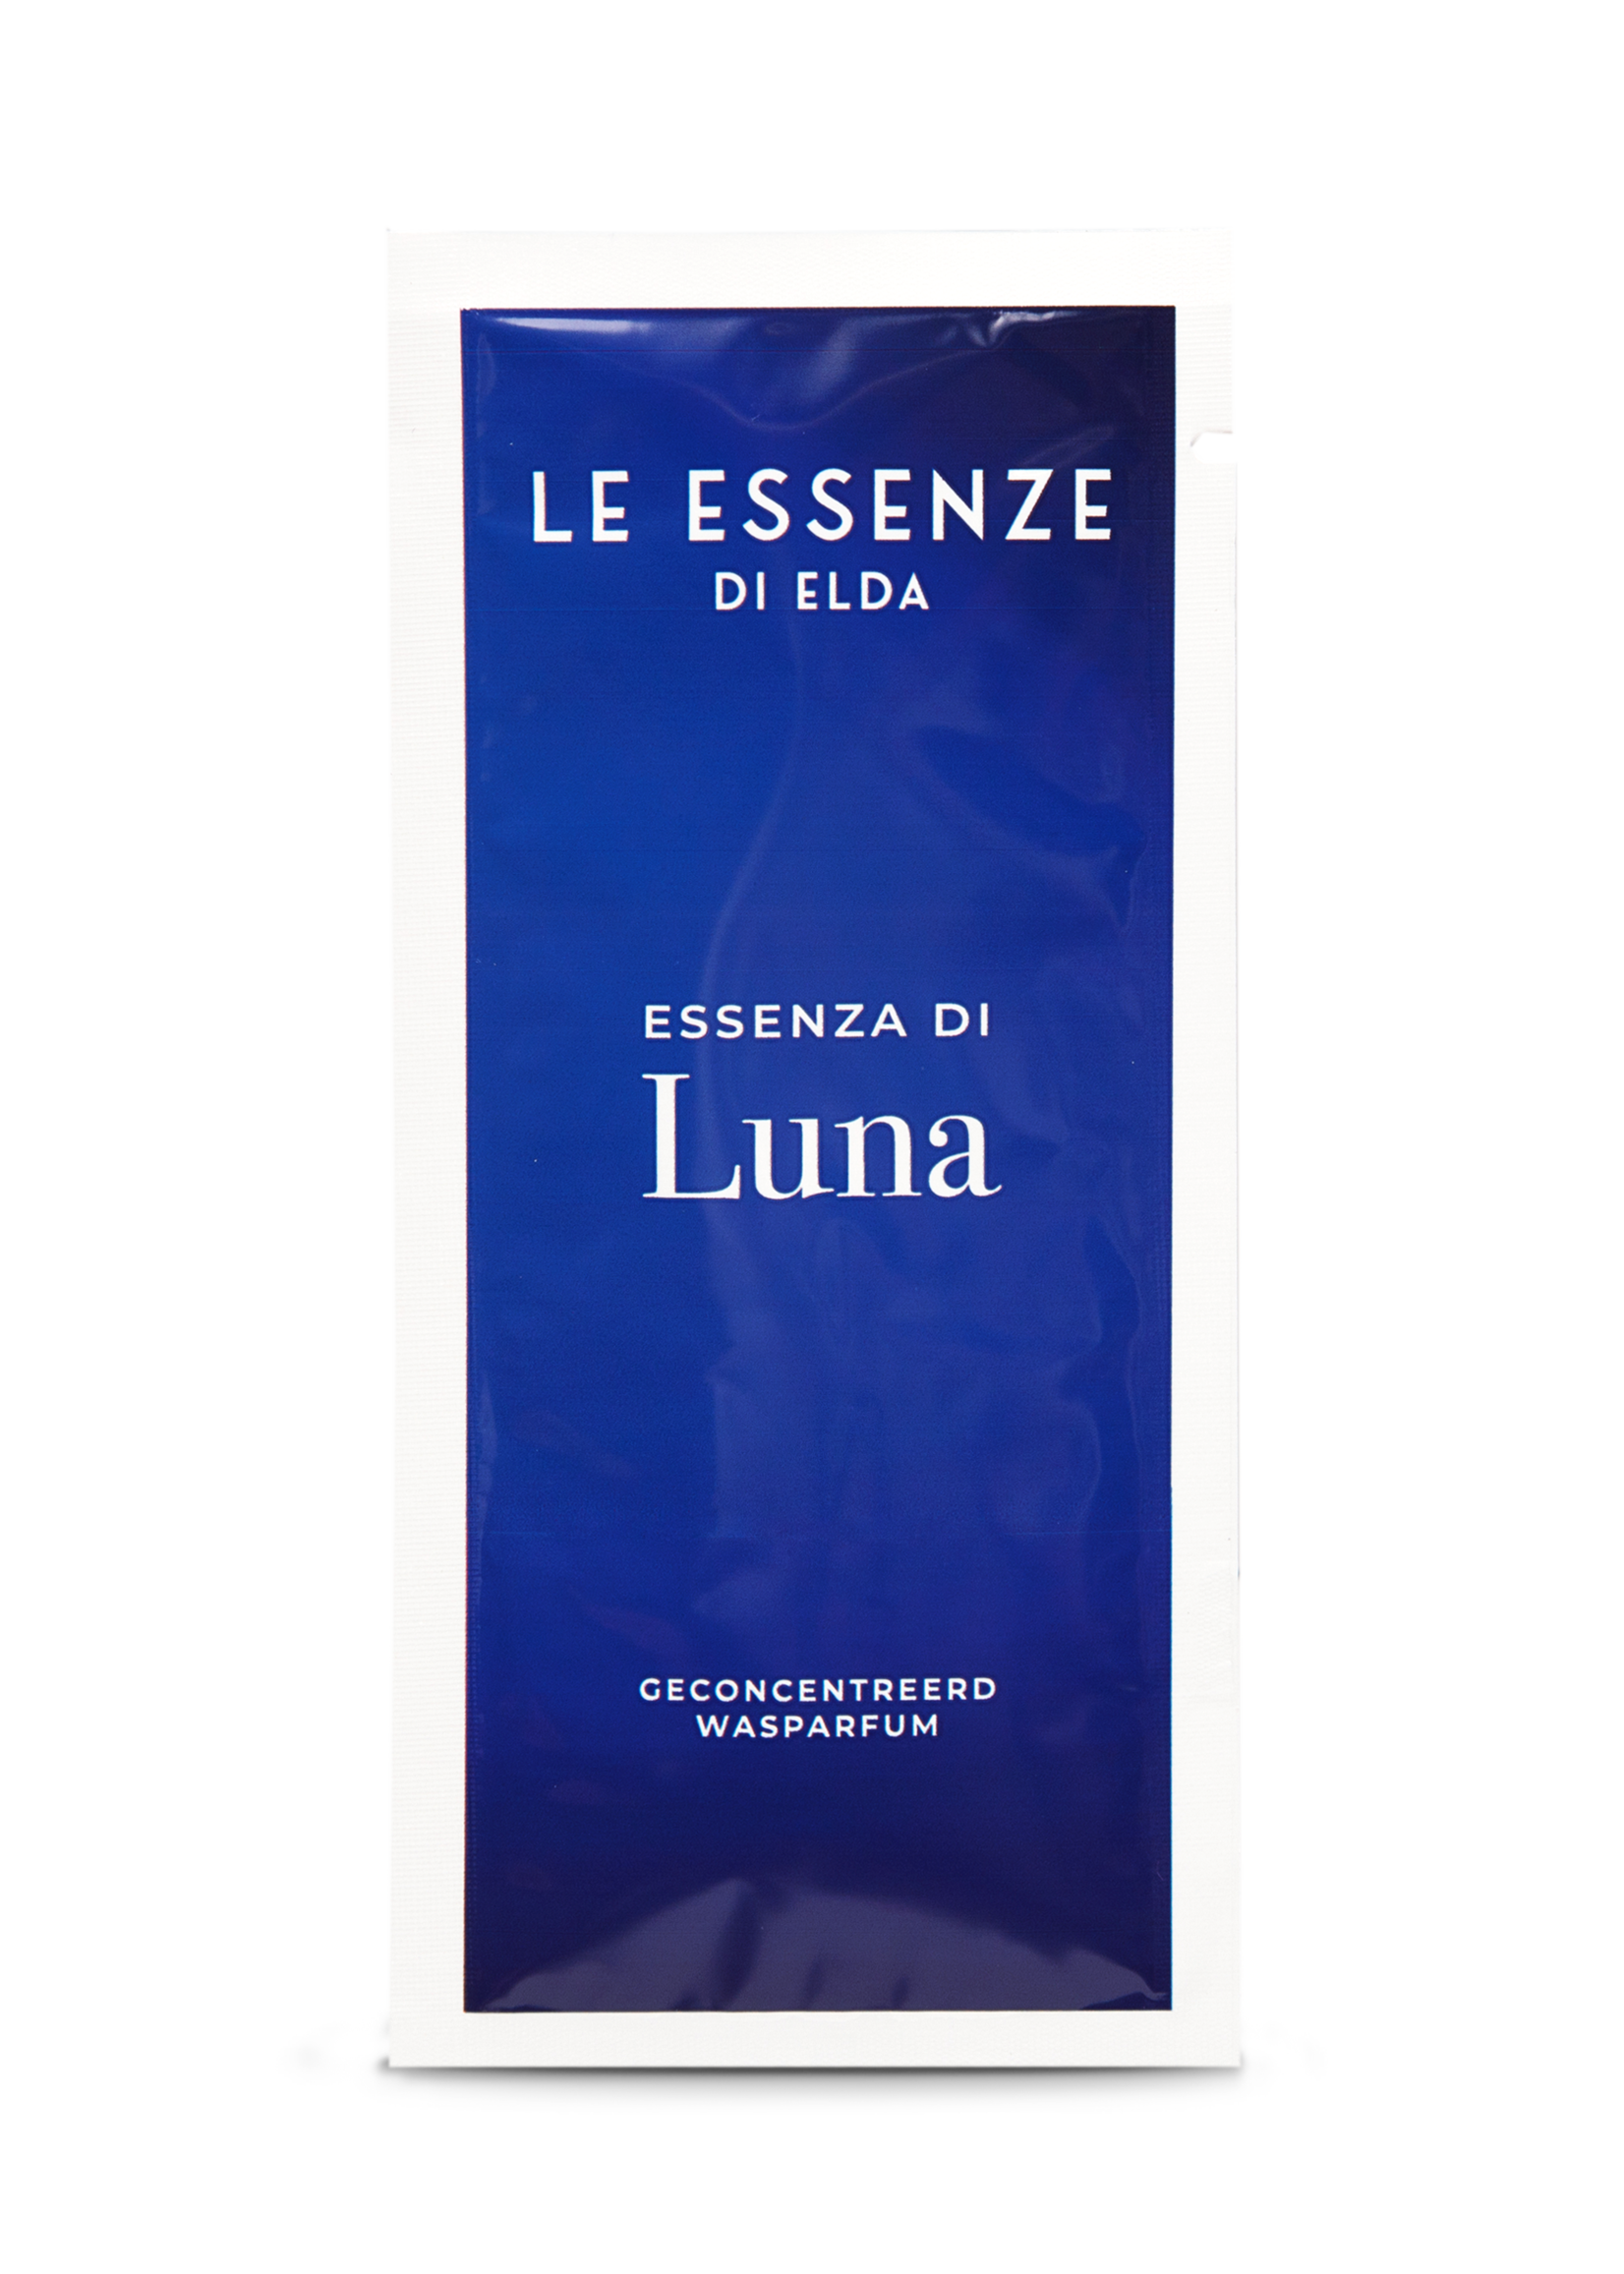 Le Essenza di Elda Wasparfum Luna